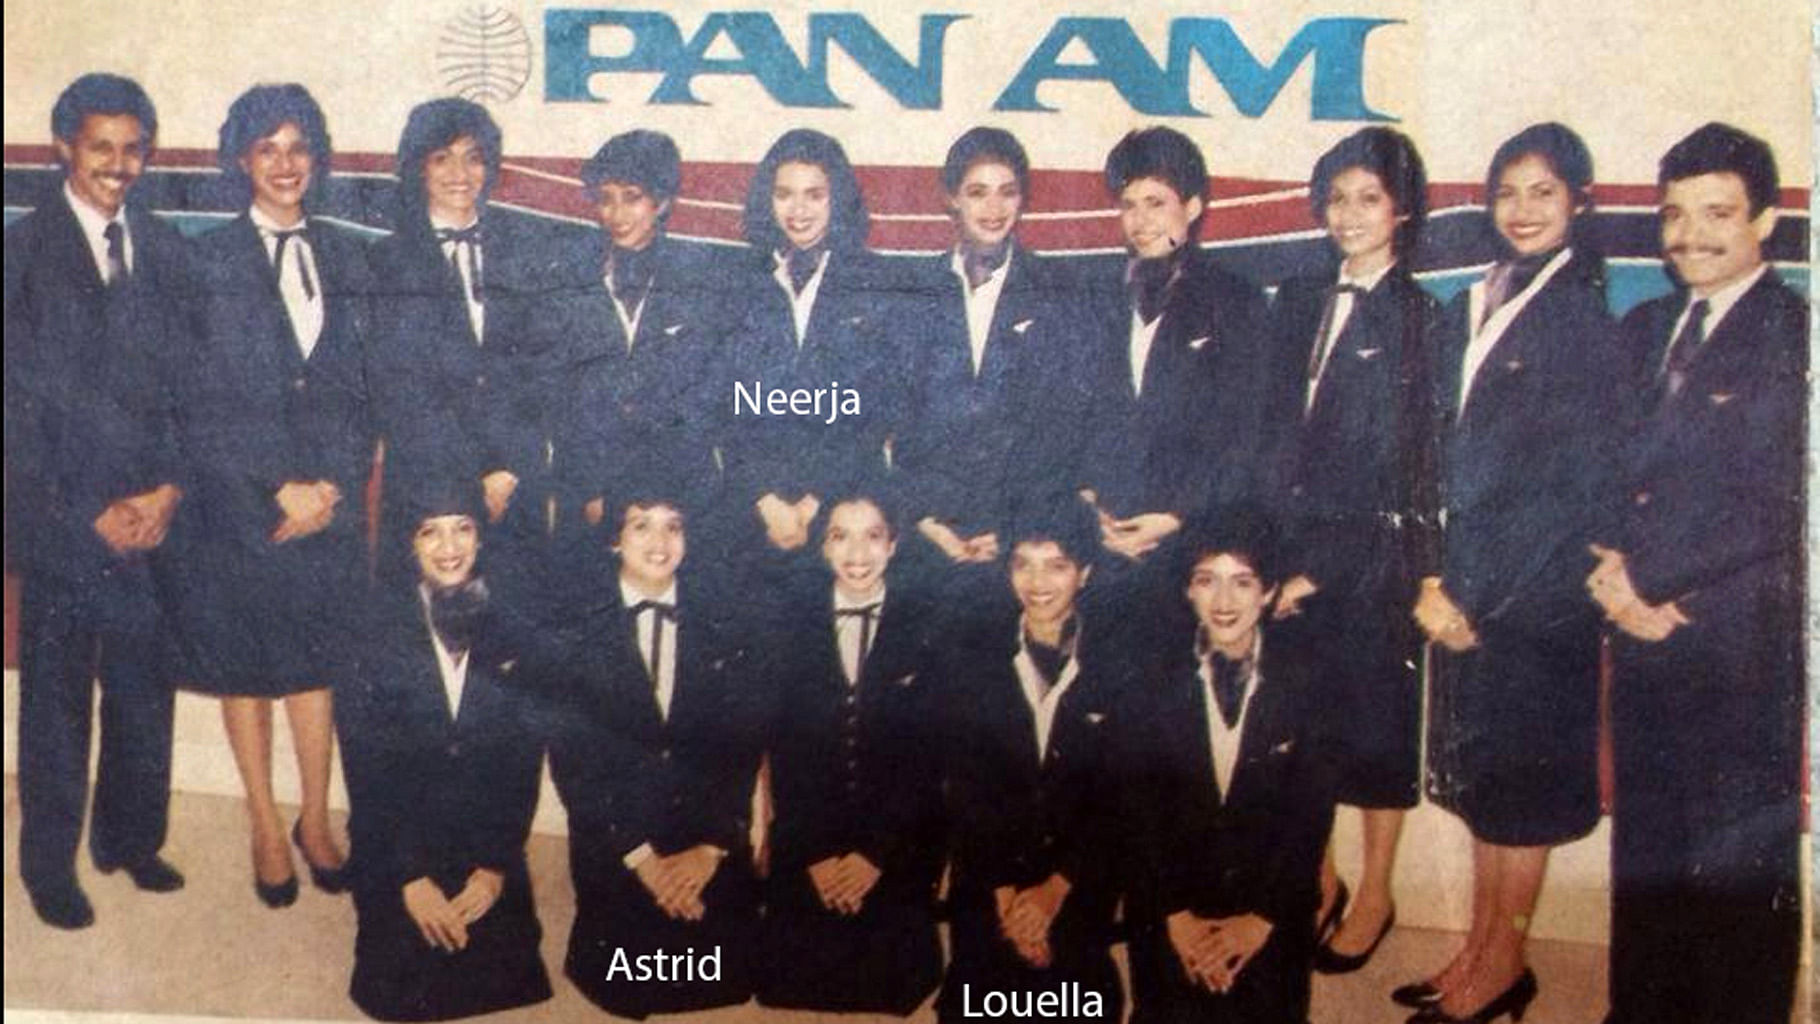 The crew of Pan Am 73. (Photo Courtesy: Steve Priske)